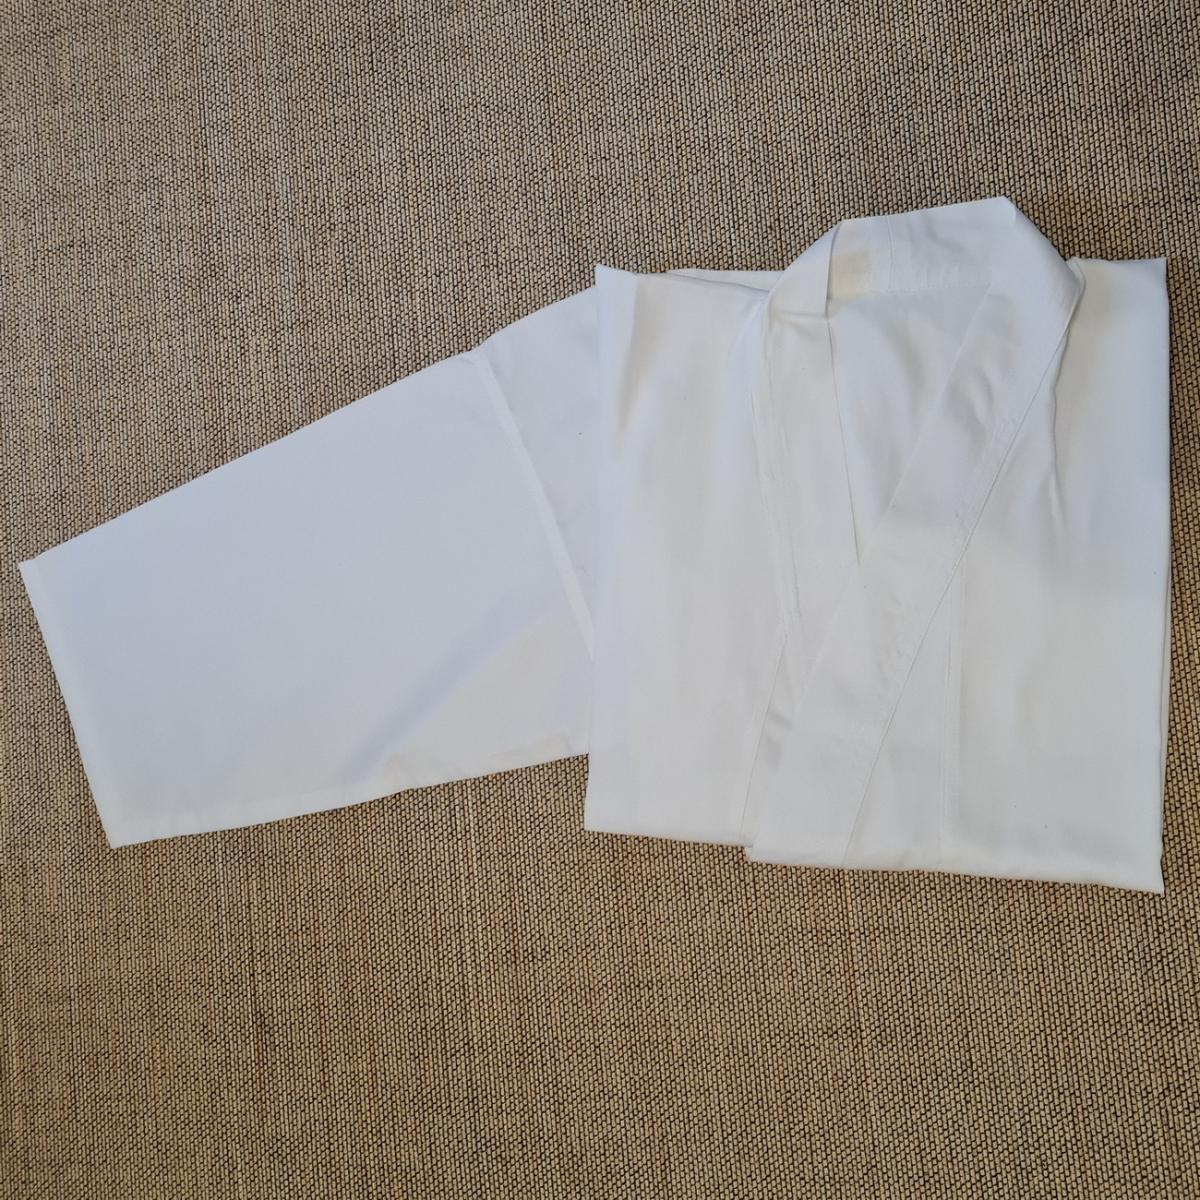 Gi made of cotton - fabric color white - size 155 cm ➤ www.bokken-shop.de. Gi suitable for Iaido, Aikdo, Kendo, Jodo. Your Budo dealer!